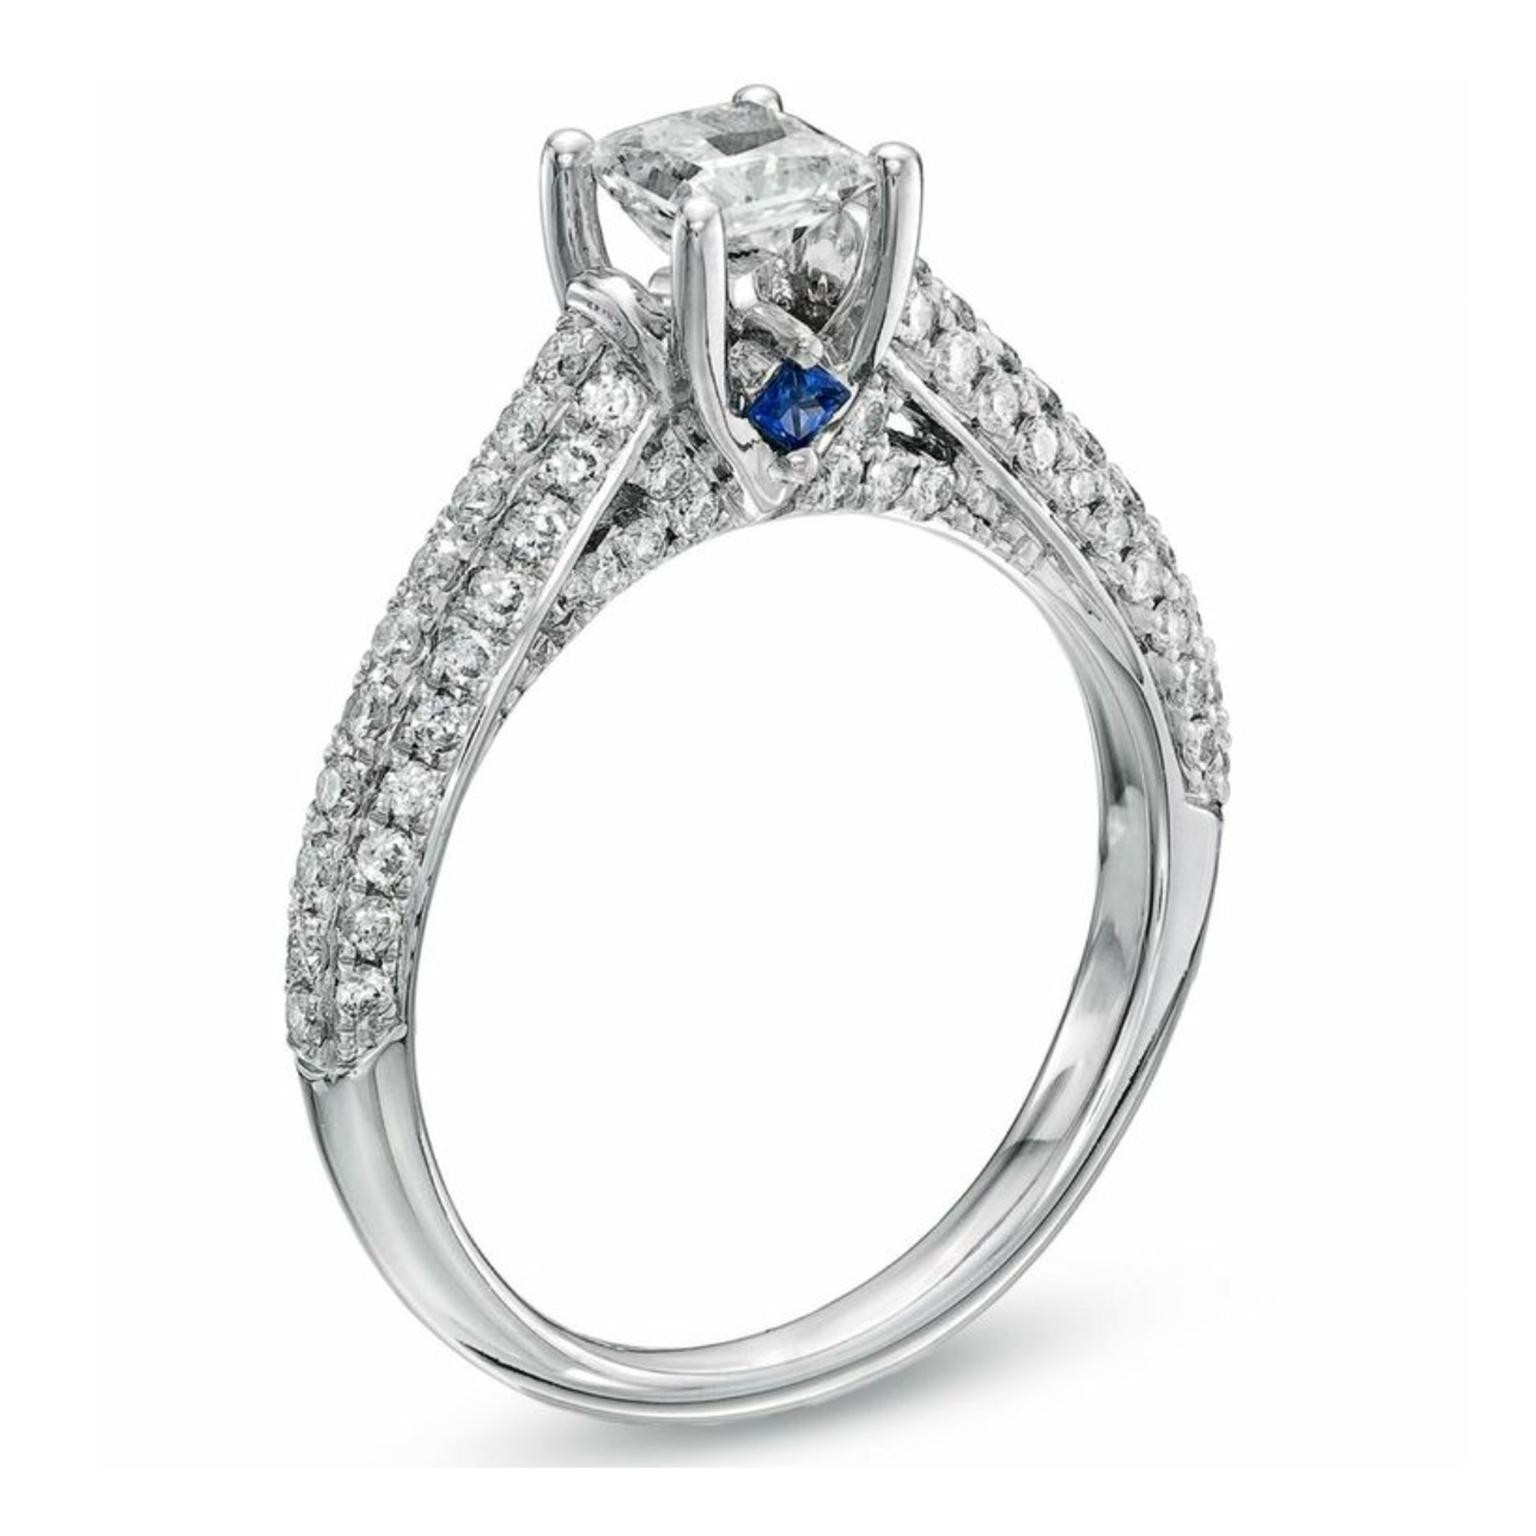 Vera Wang Wedding Rings
 LOVE princess cut diamond engagement ring